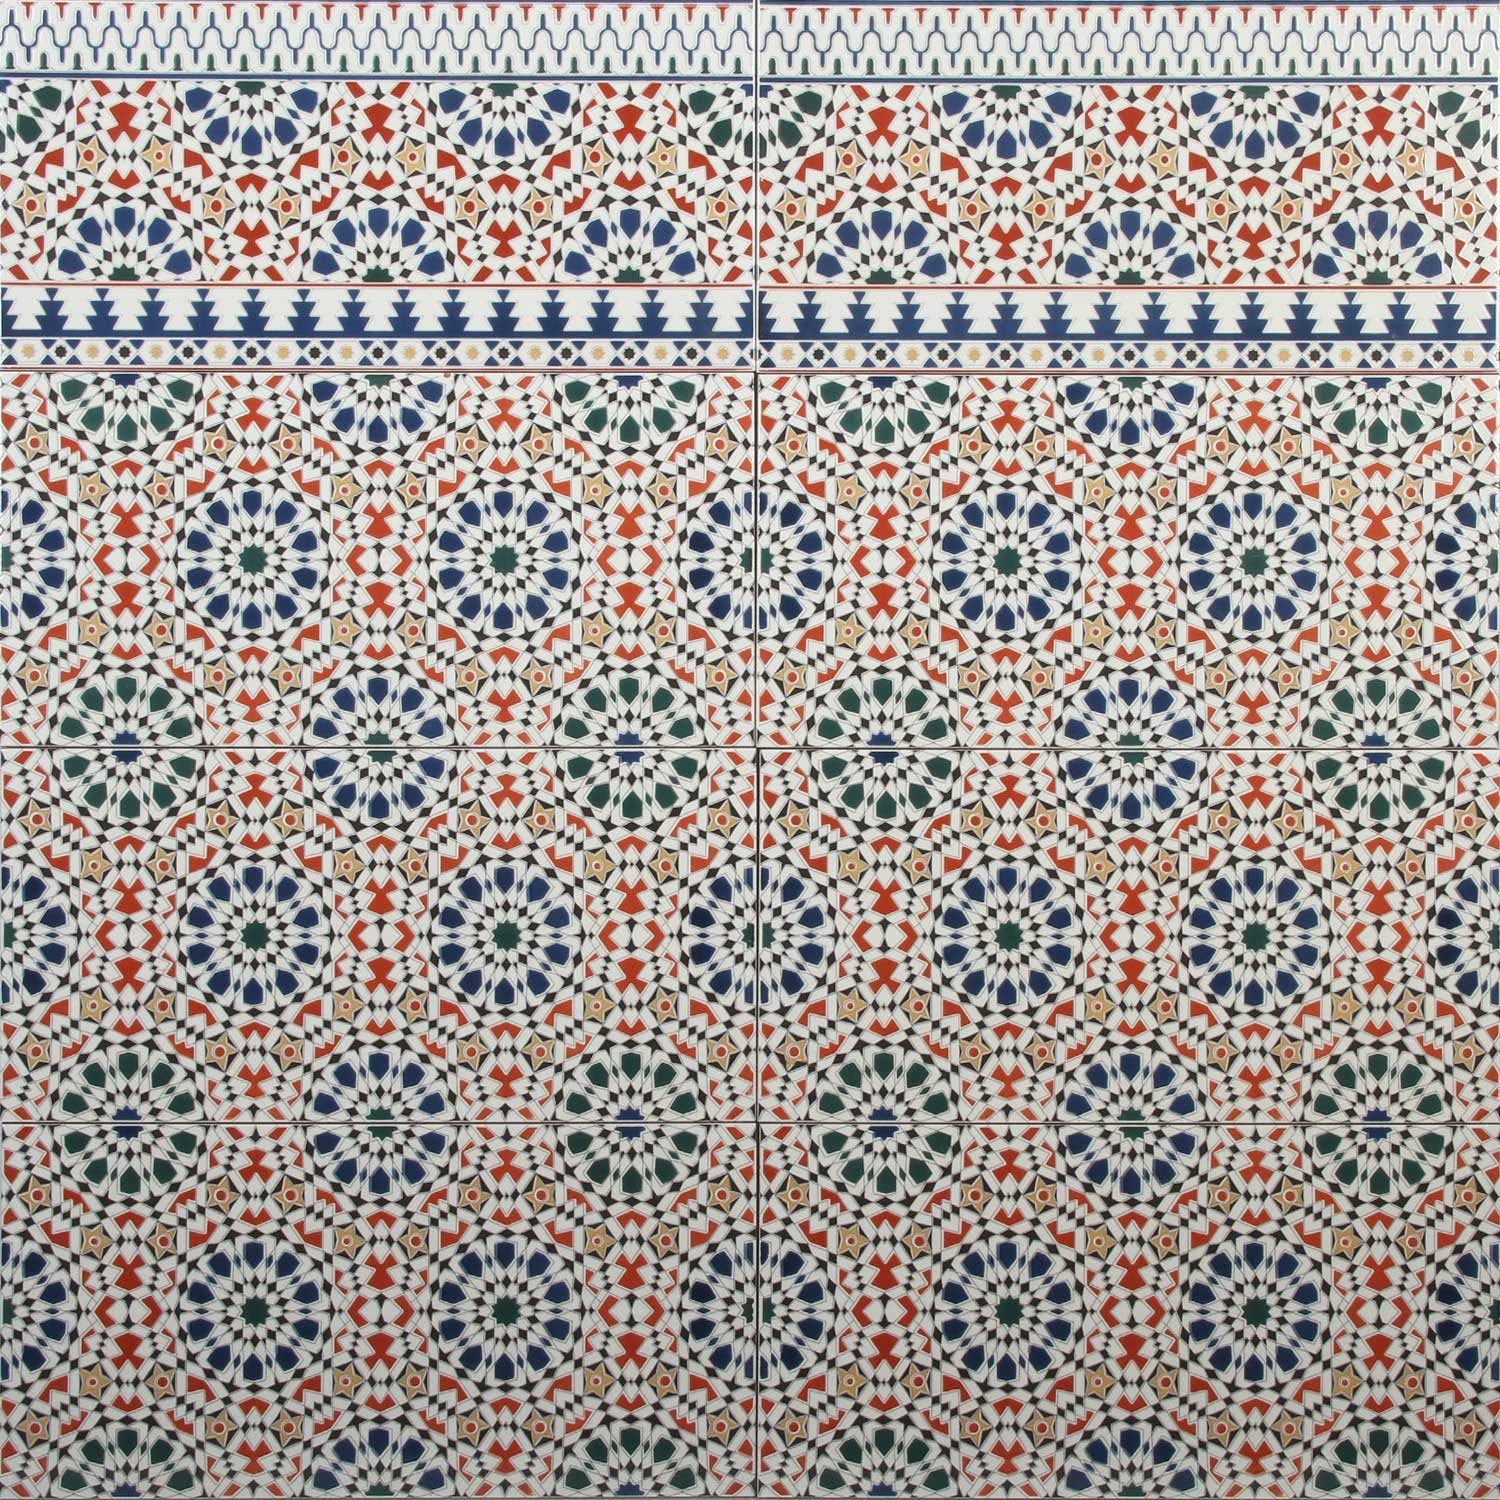 Wandfliese mit cm Mosaik-Muster, Endlos 1 Casa Moro 50x25 Fliesen Muster Liman qm bunt Marokkanische